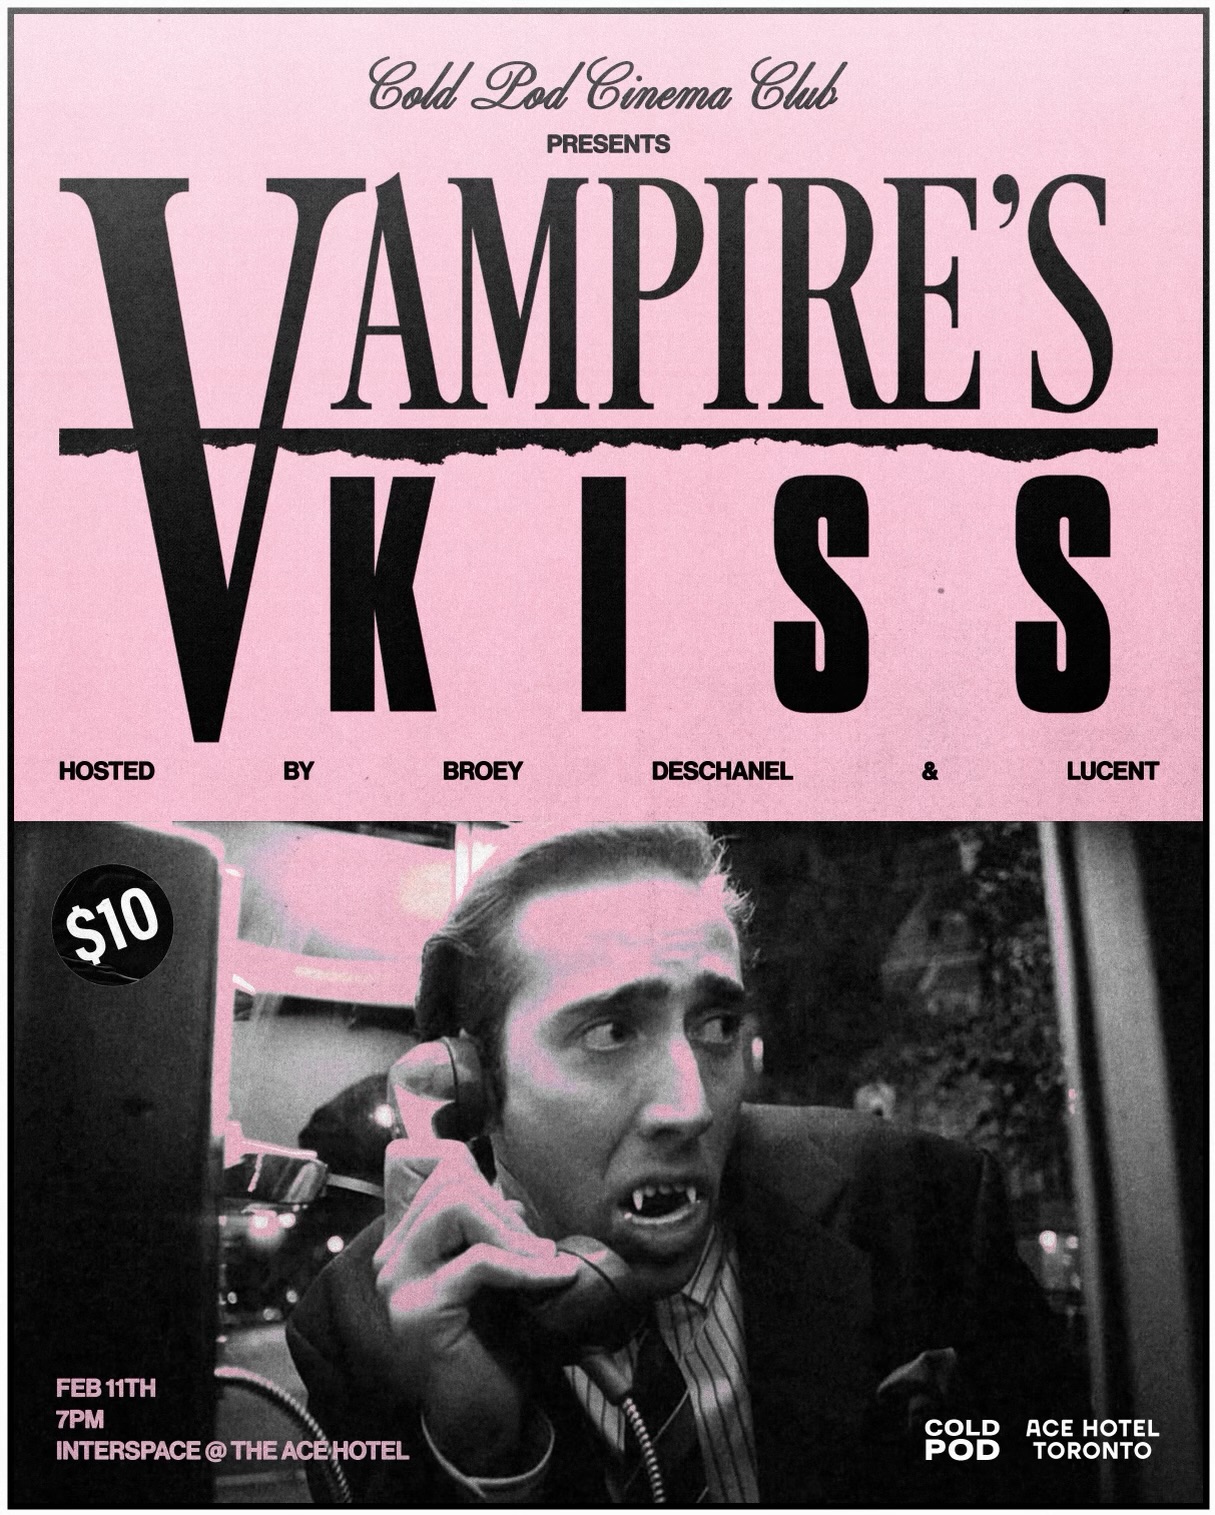 Vampire's Kiss promo